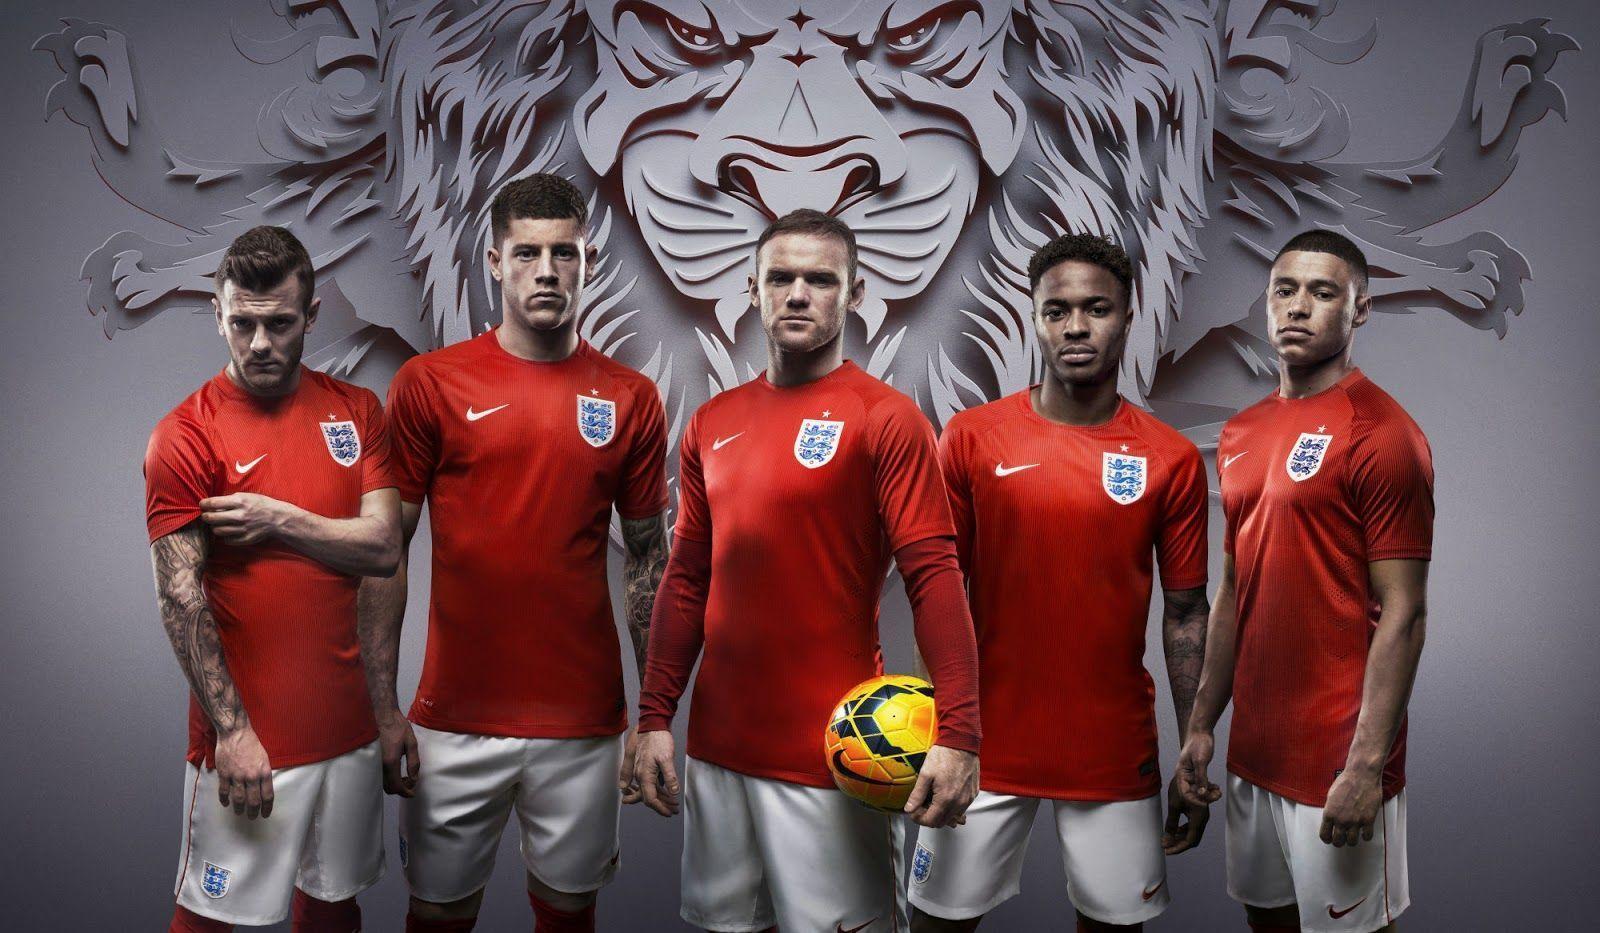 Nike England 2014 World Cup Team Jersey Free Wallpaper HD. Soccer